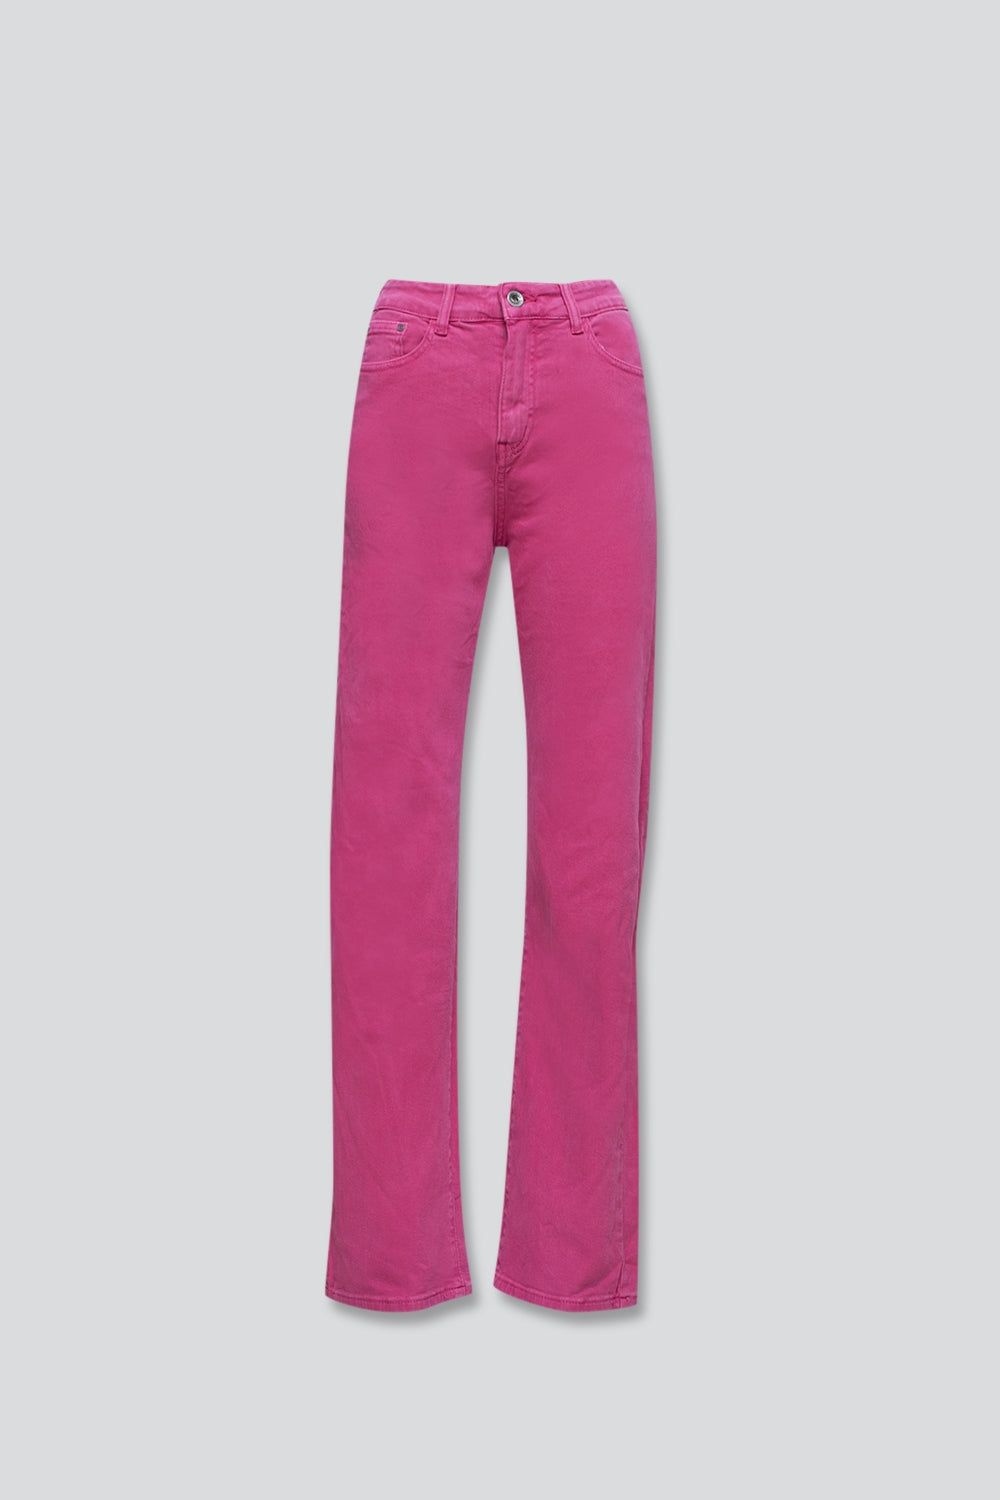 High rise slouchy mom jeans in fuchsia Szua Store